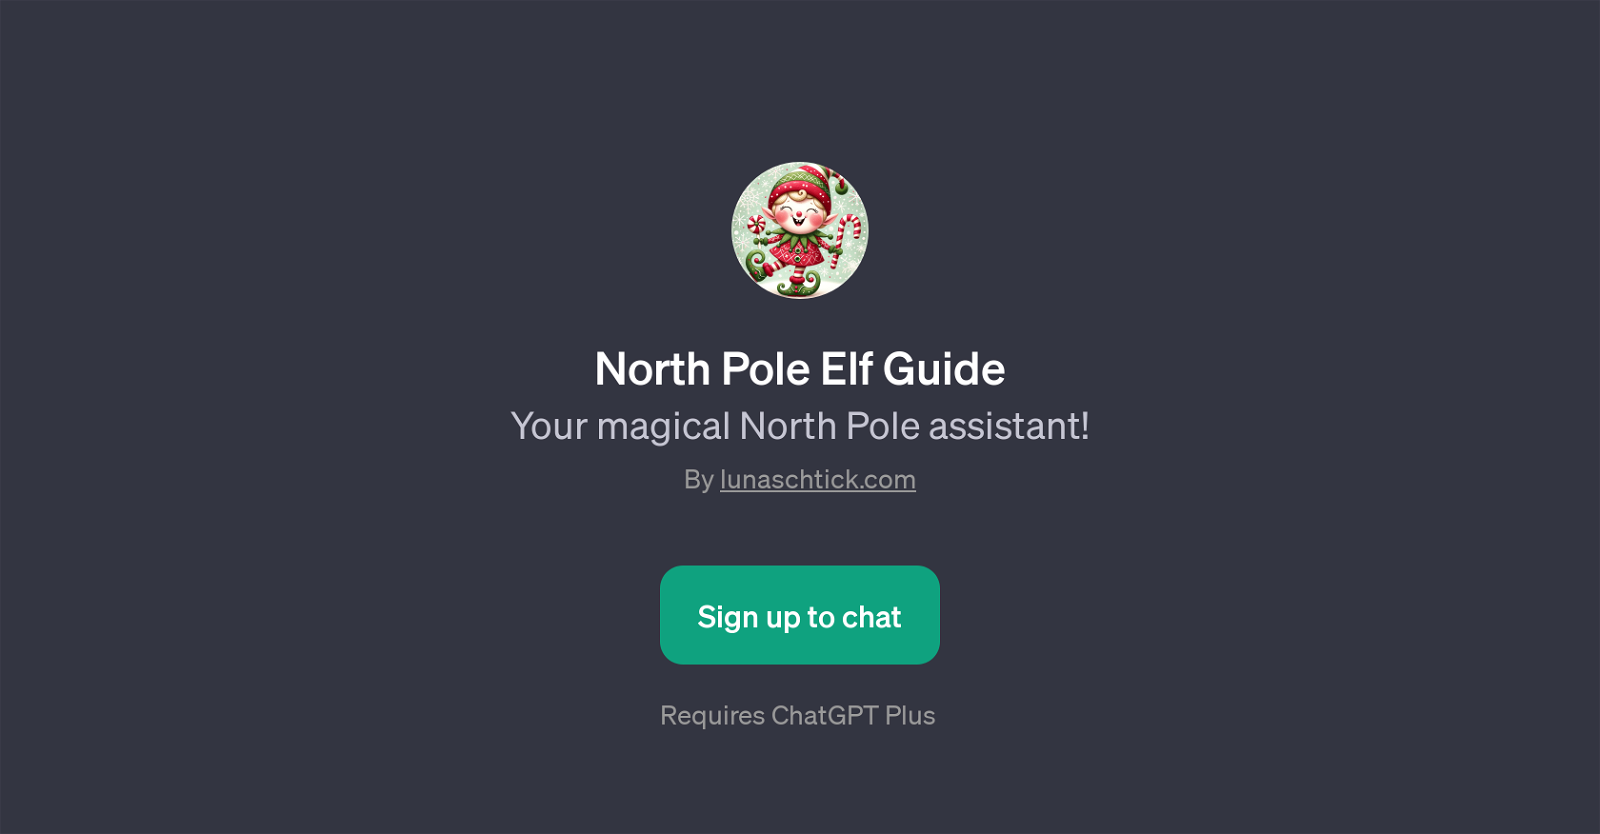 North Pole Elf Guide website